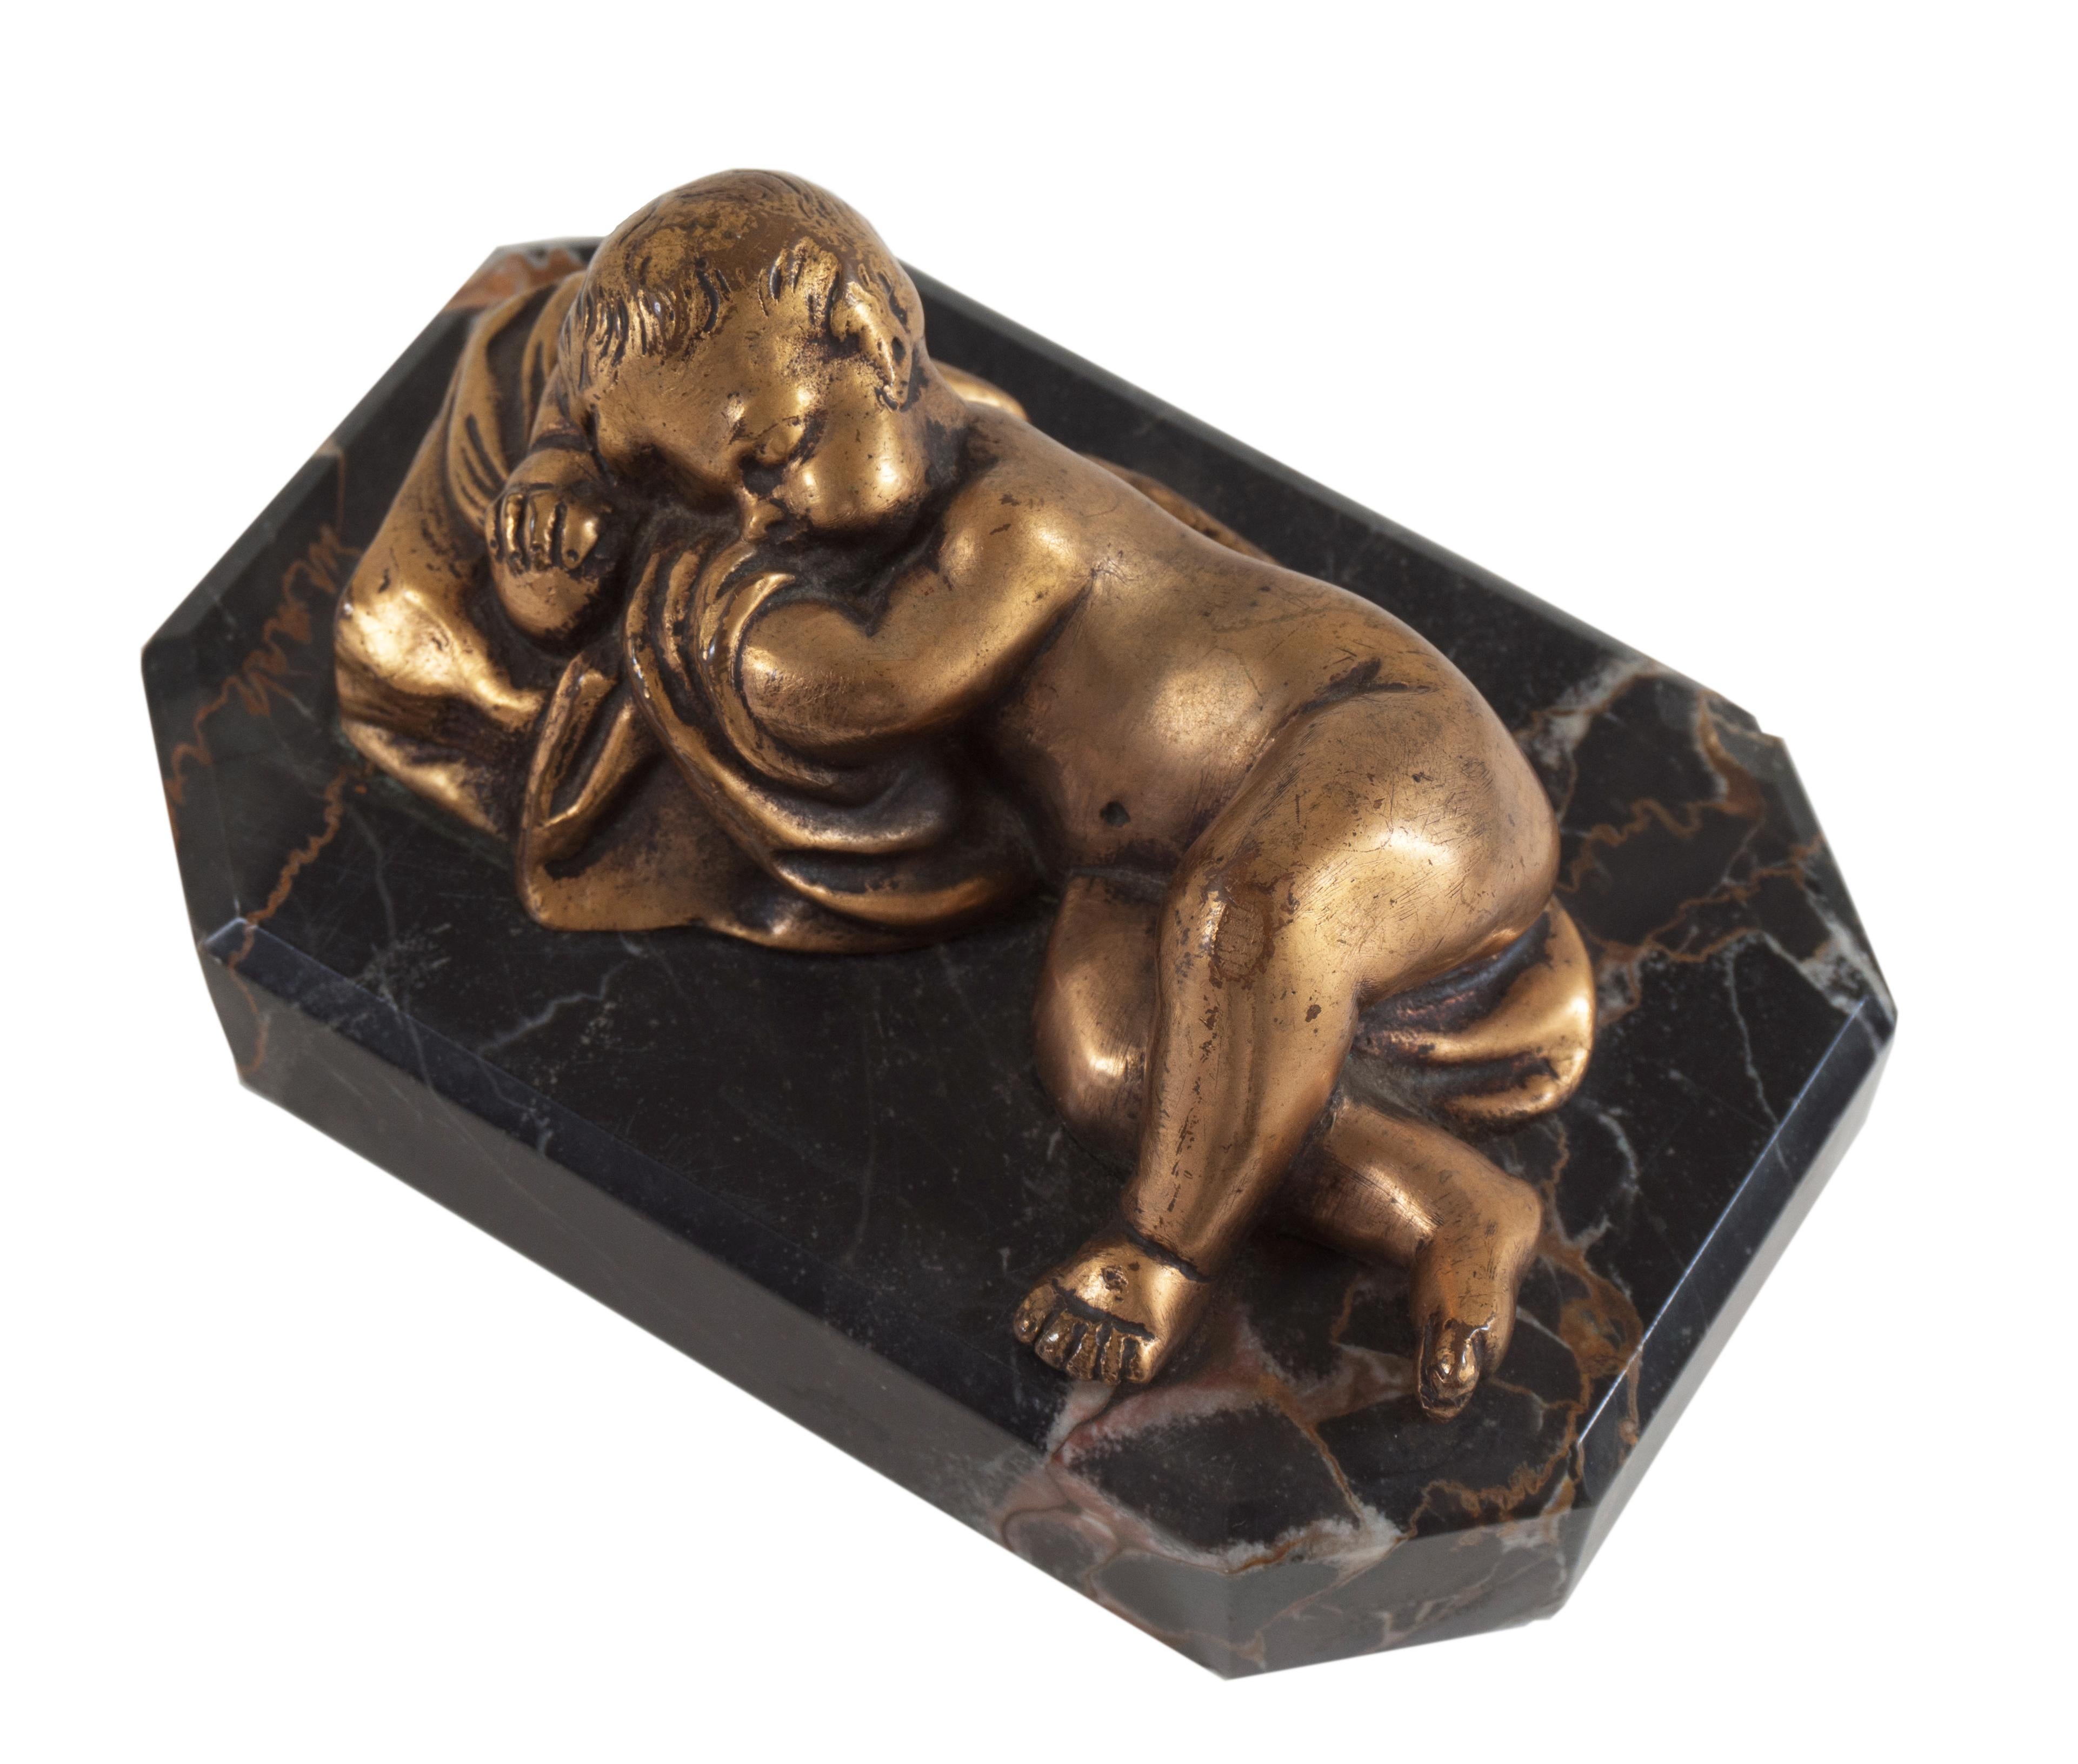  'Sleeping Cherub' Small Beaux Arts gilt-bronze sculpture on Portoro Marble Base - Gold Figurative Sculpture by Unknown